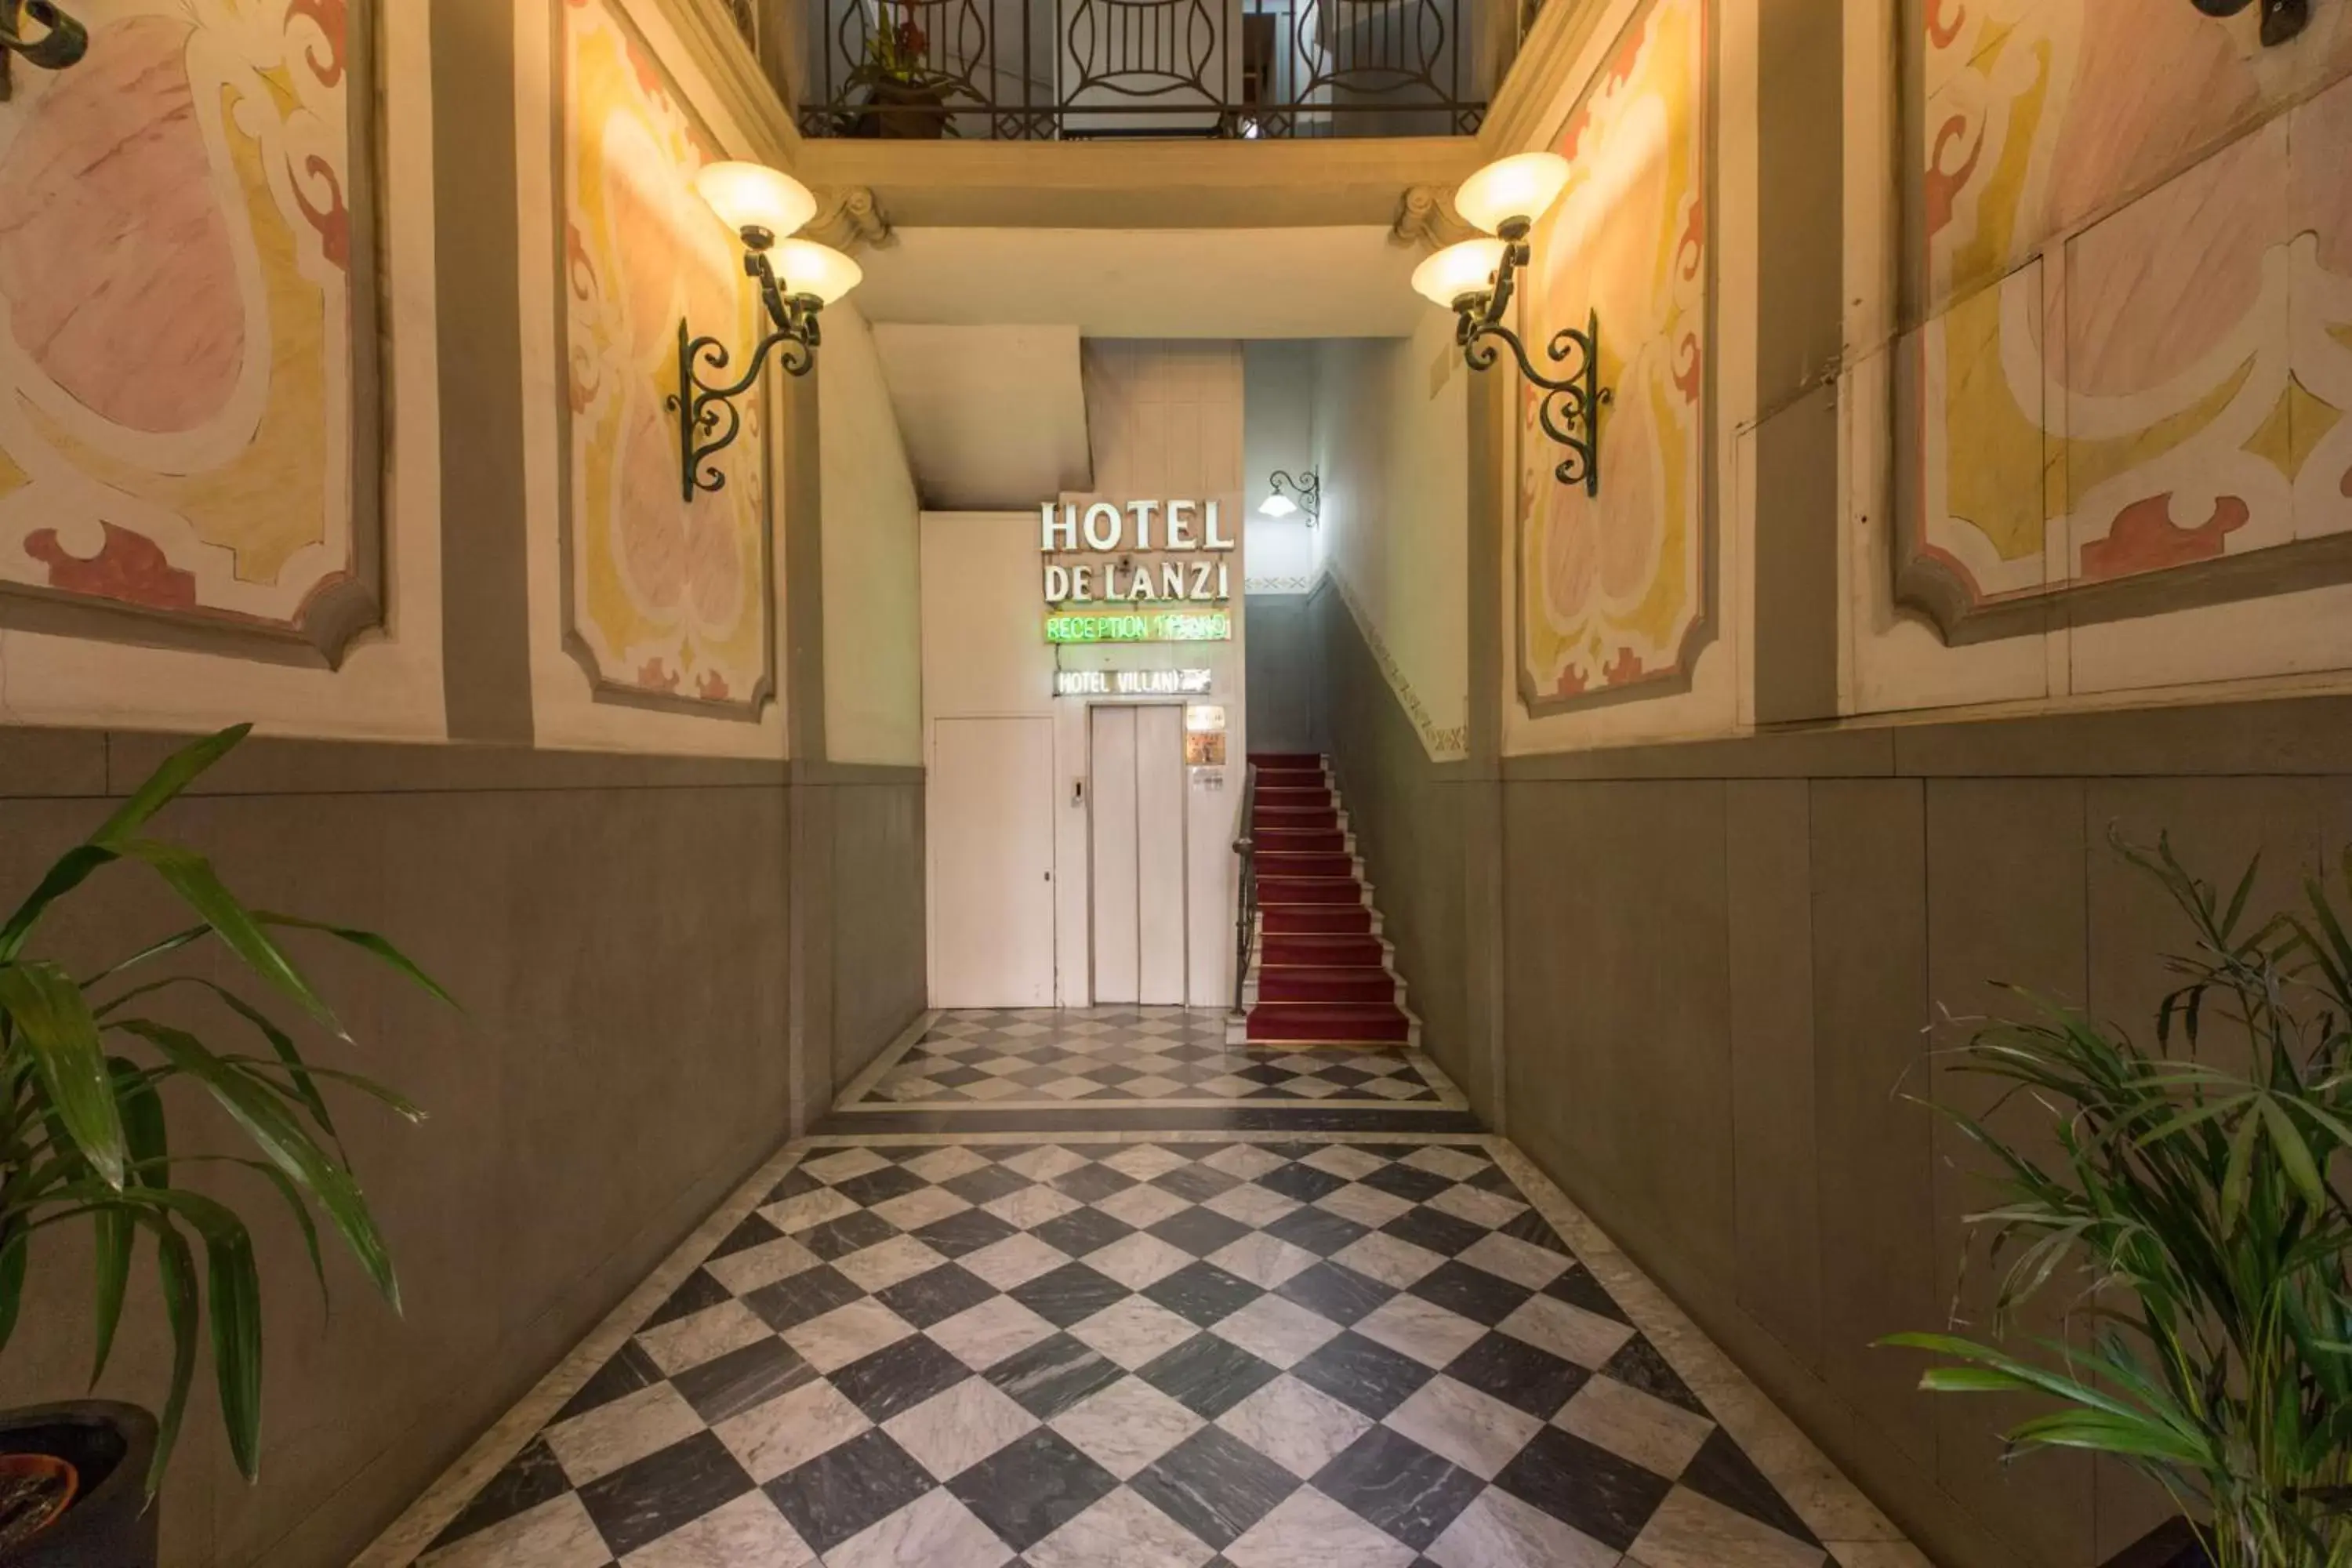 Decorative detail, Lobby/Reception in Hotel De Lanzi